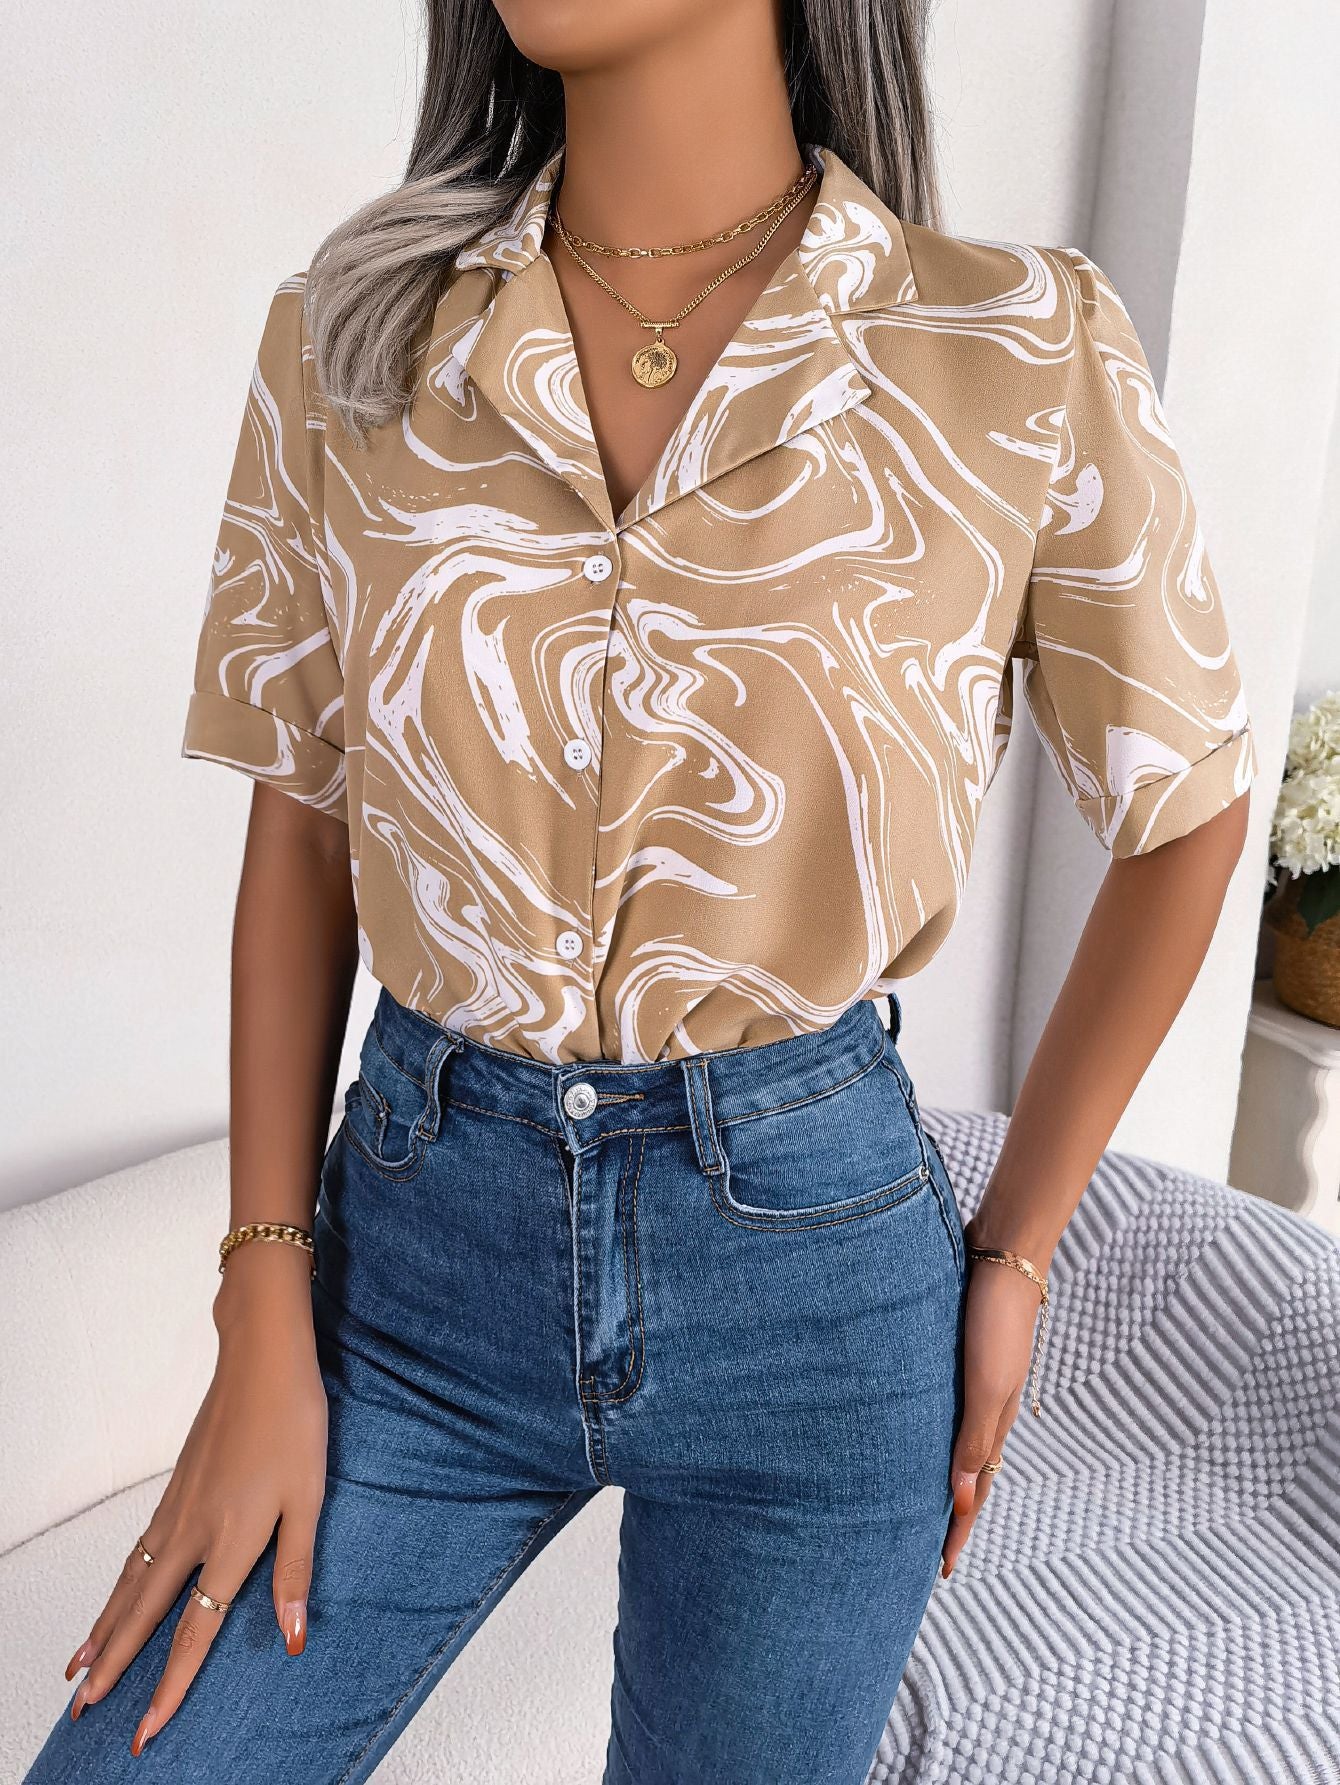 Fashion Tie Dye Printed Short Sleeve Shirt Summer Casual Lapel Shirt Tops For Womens Clothing